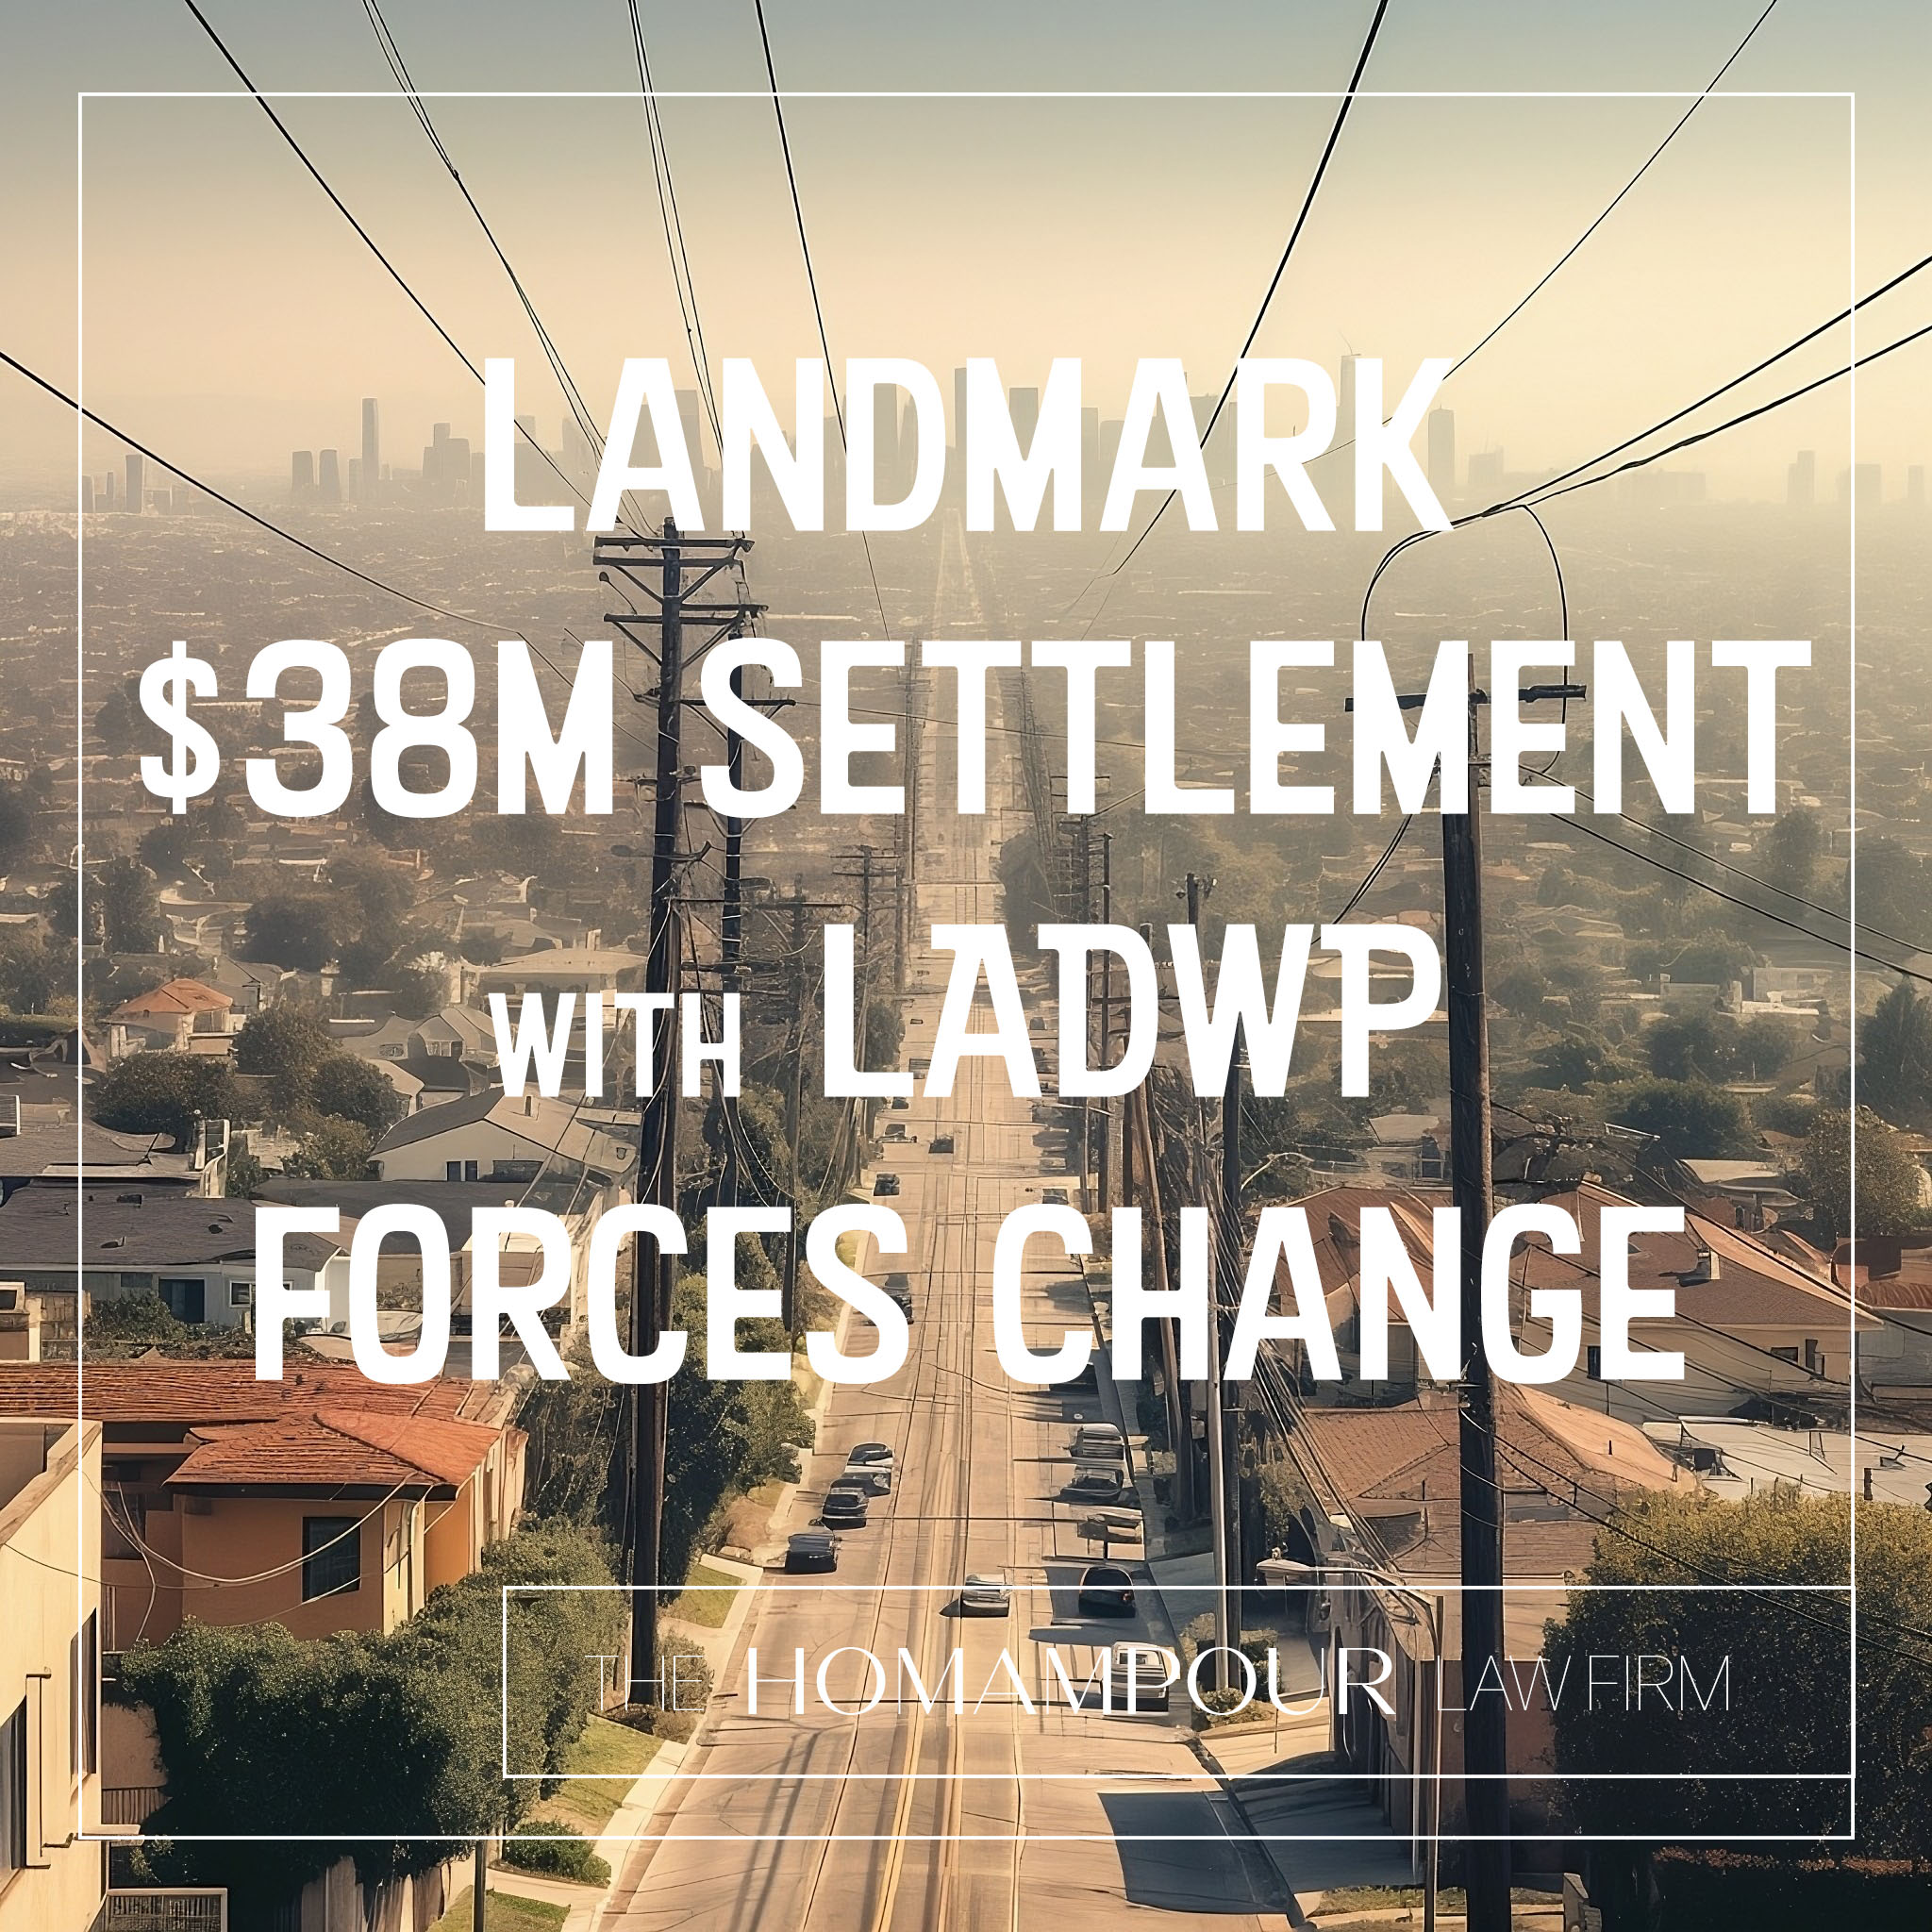 Landmark $38 M Settlement with LADWP